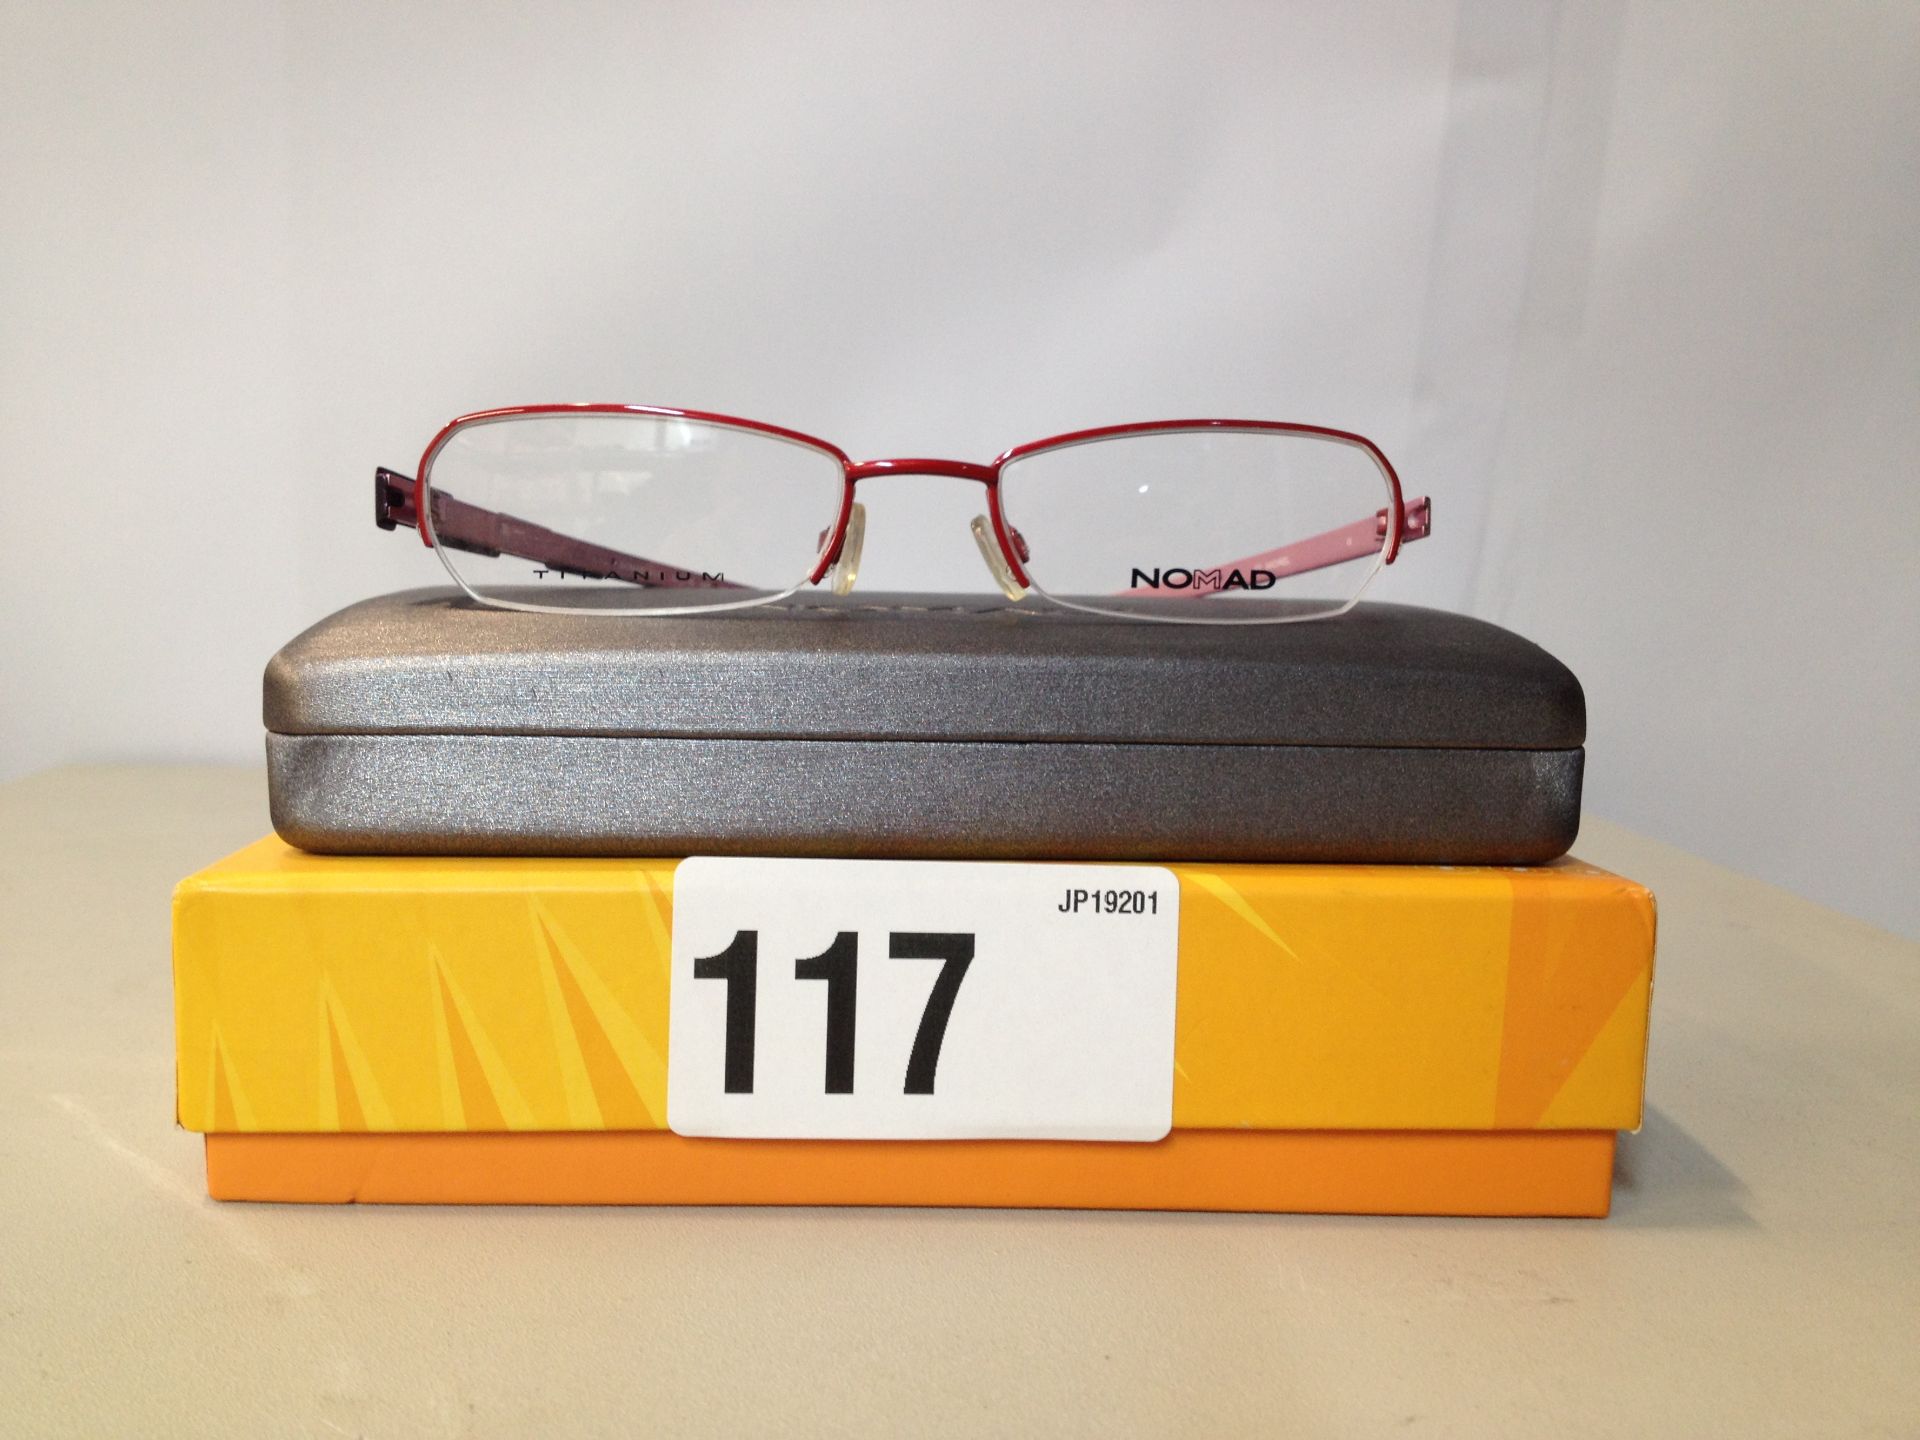 1 x Pair of NOMAD 901M Reading Glasses